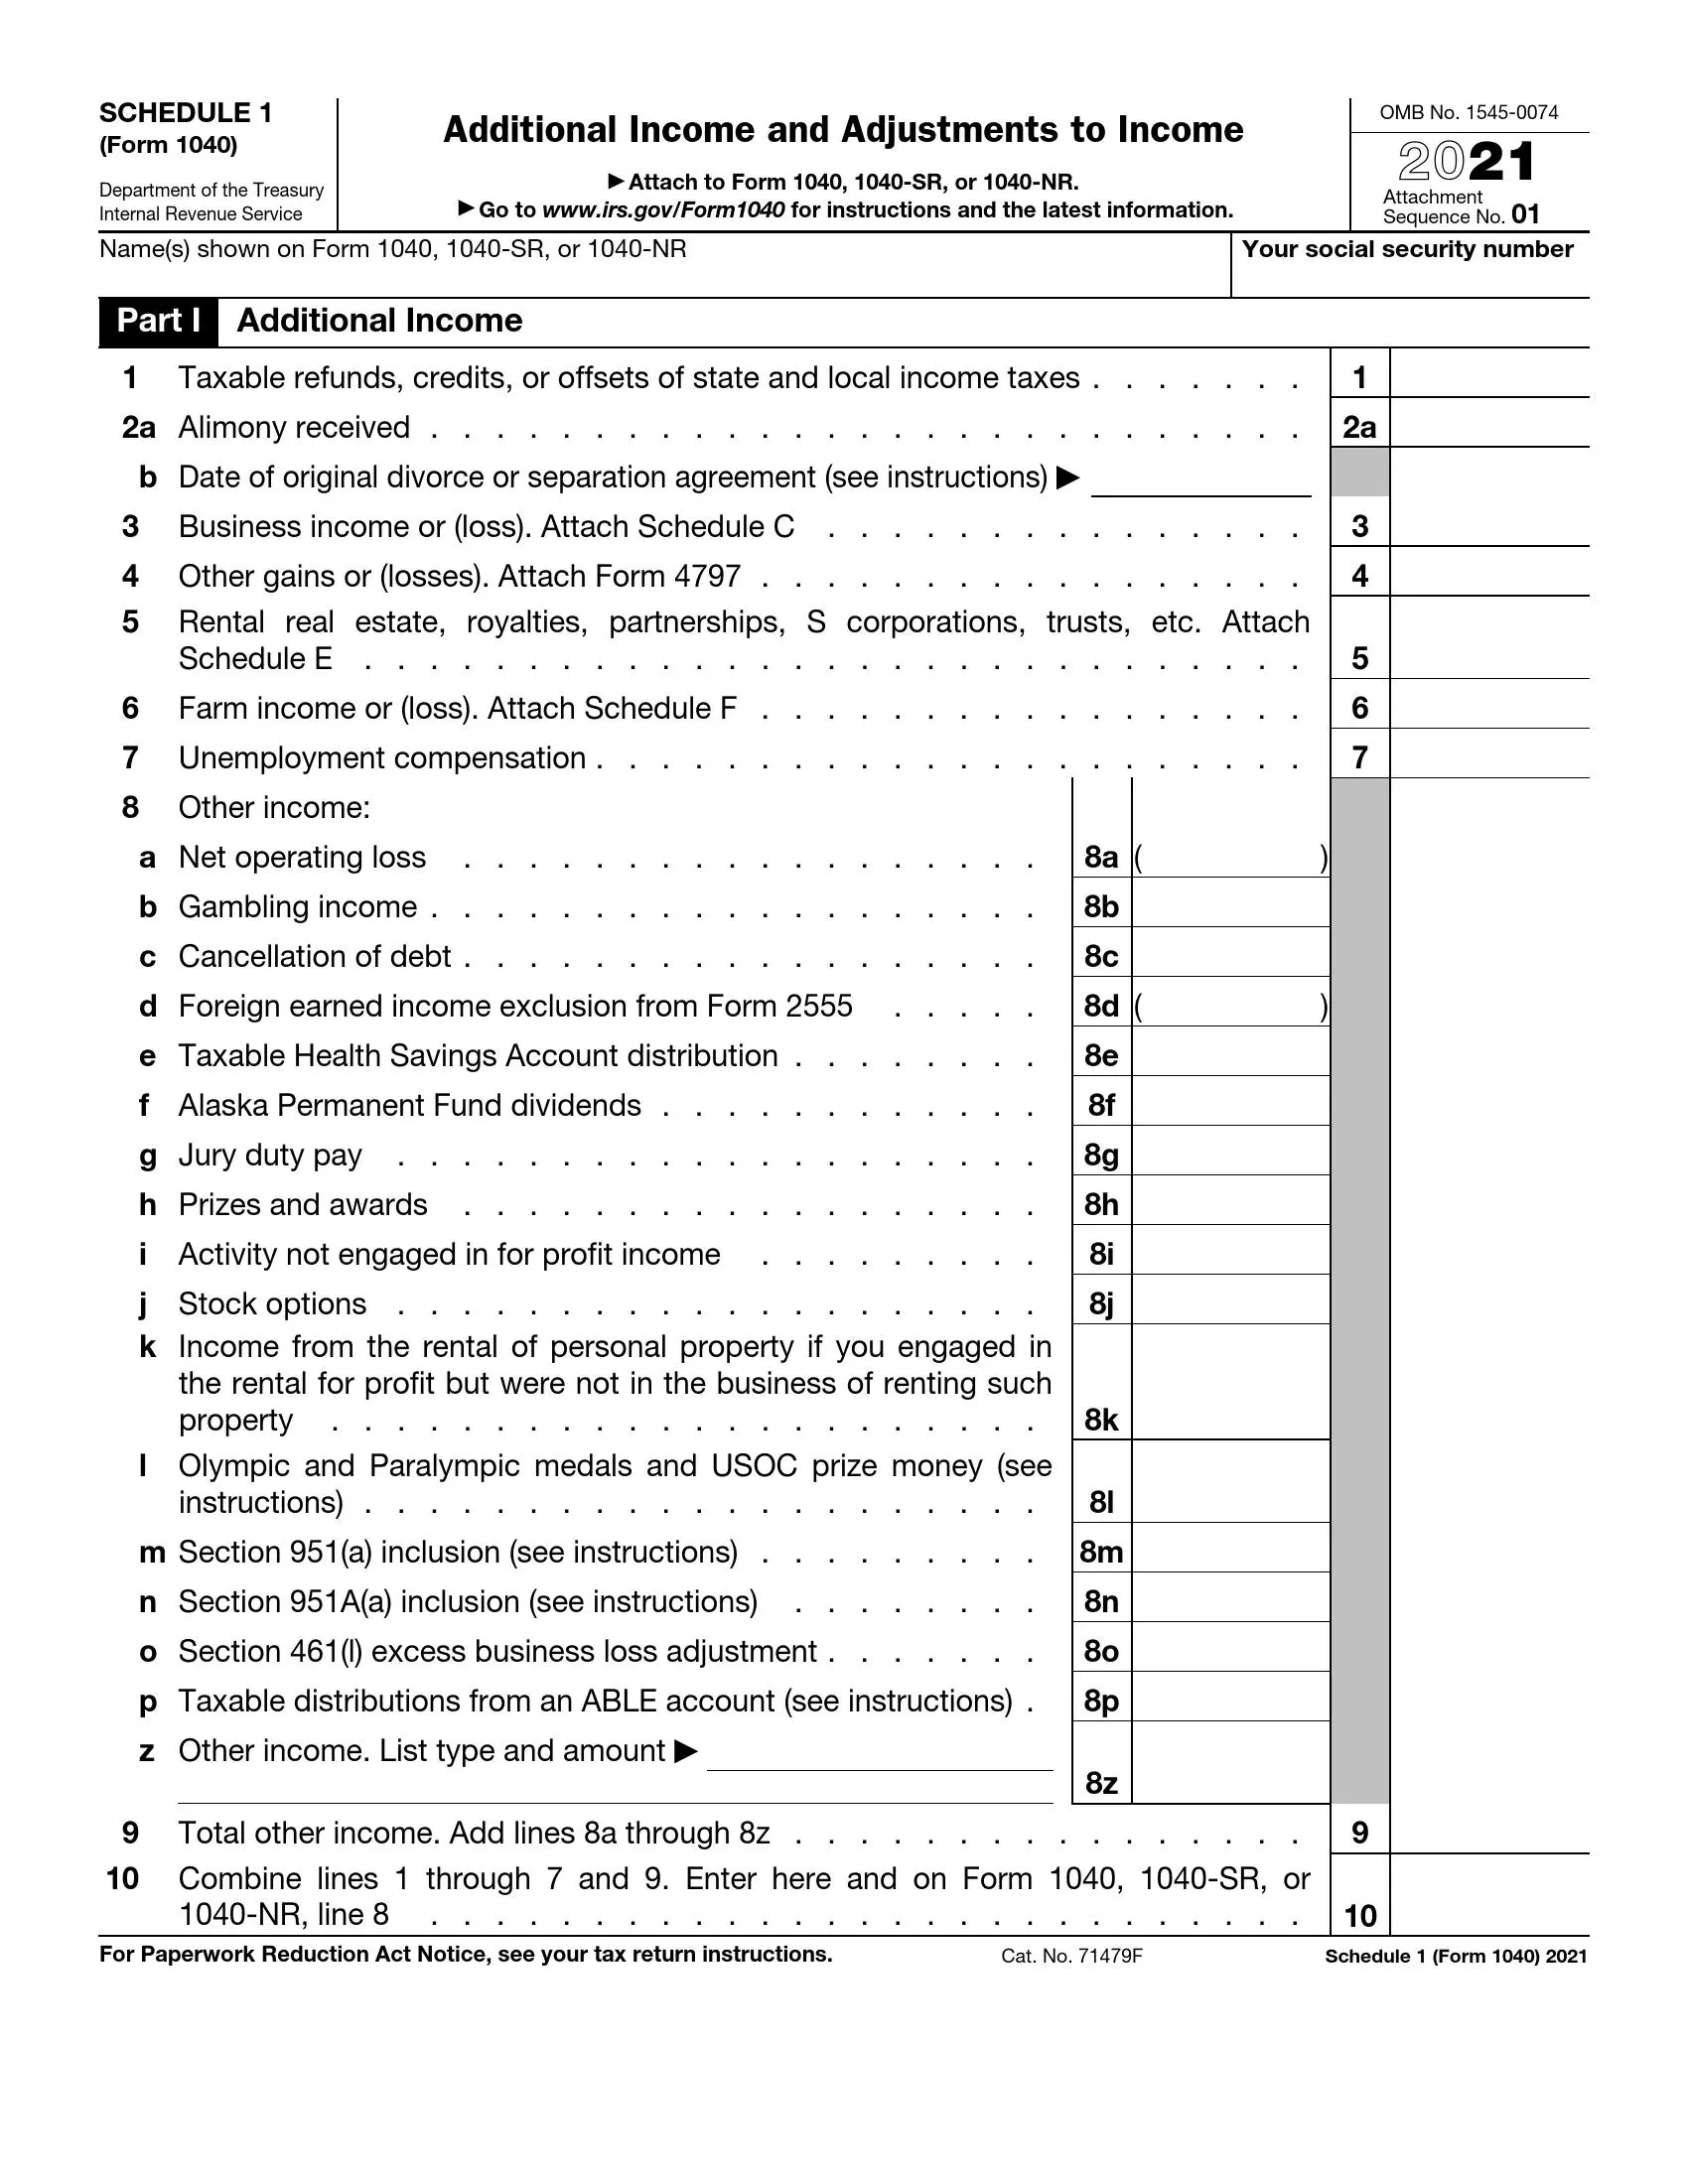 schedule 1 tax form